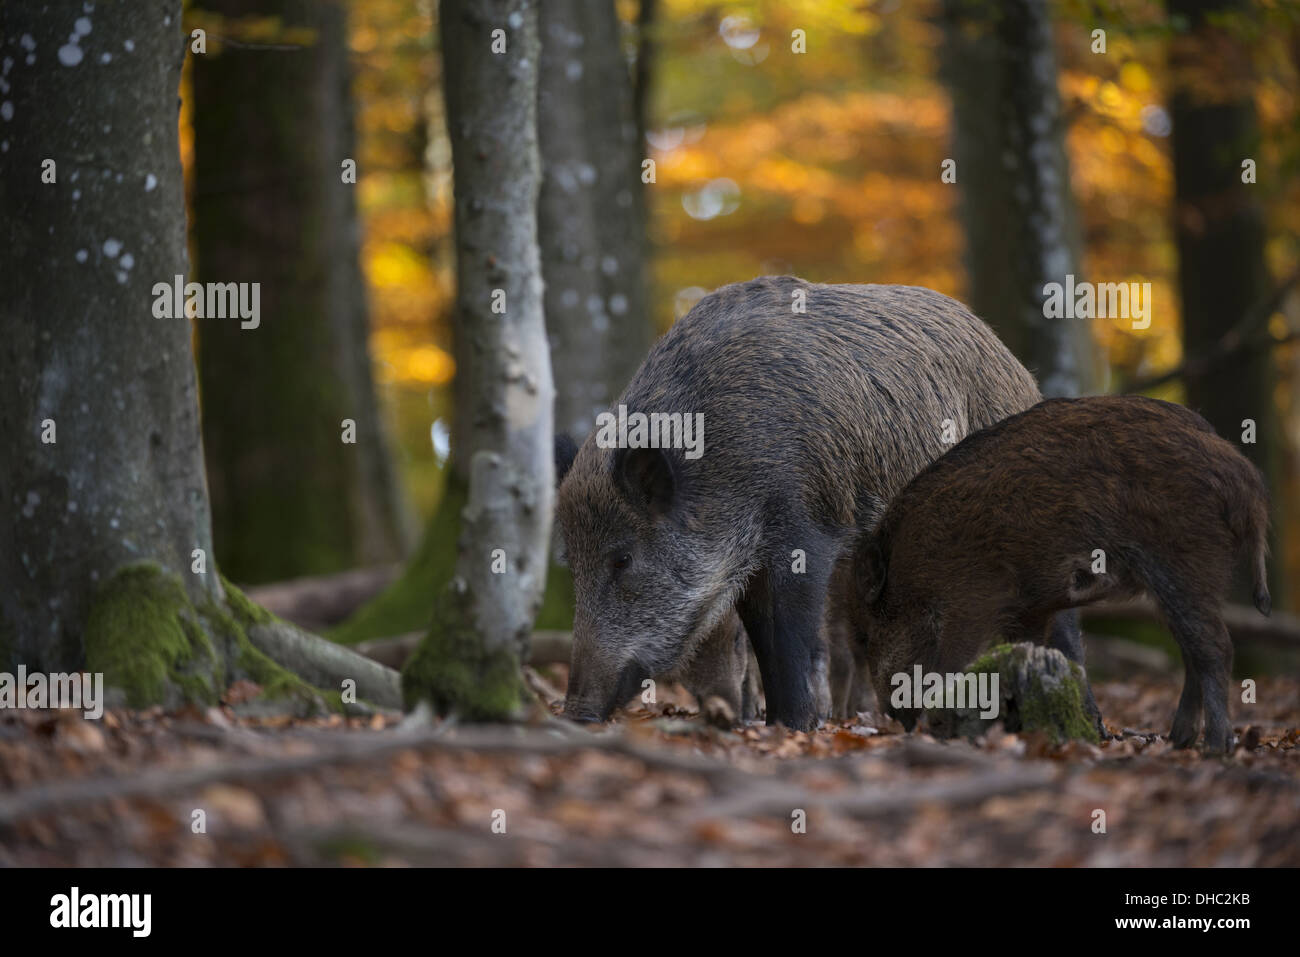 wild boar in a beech tree forest, sus scrofa, germany, europe Stock Photo